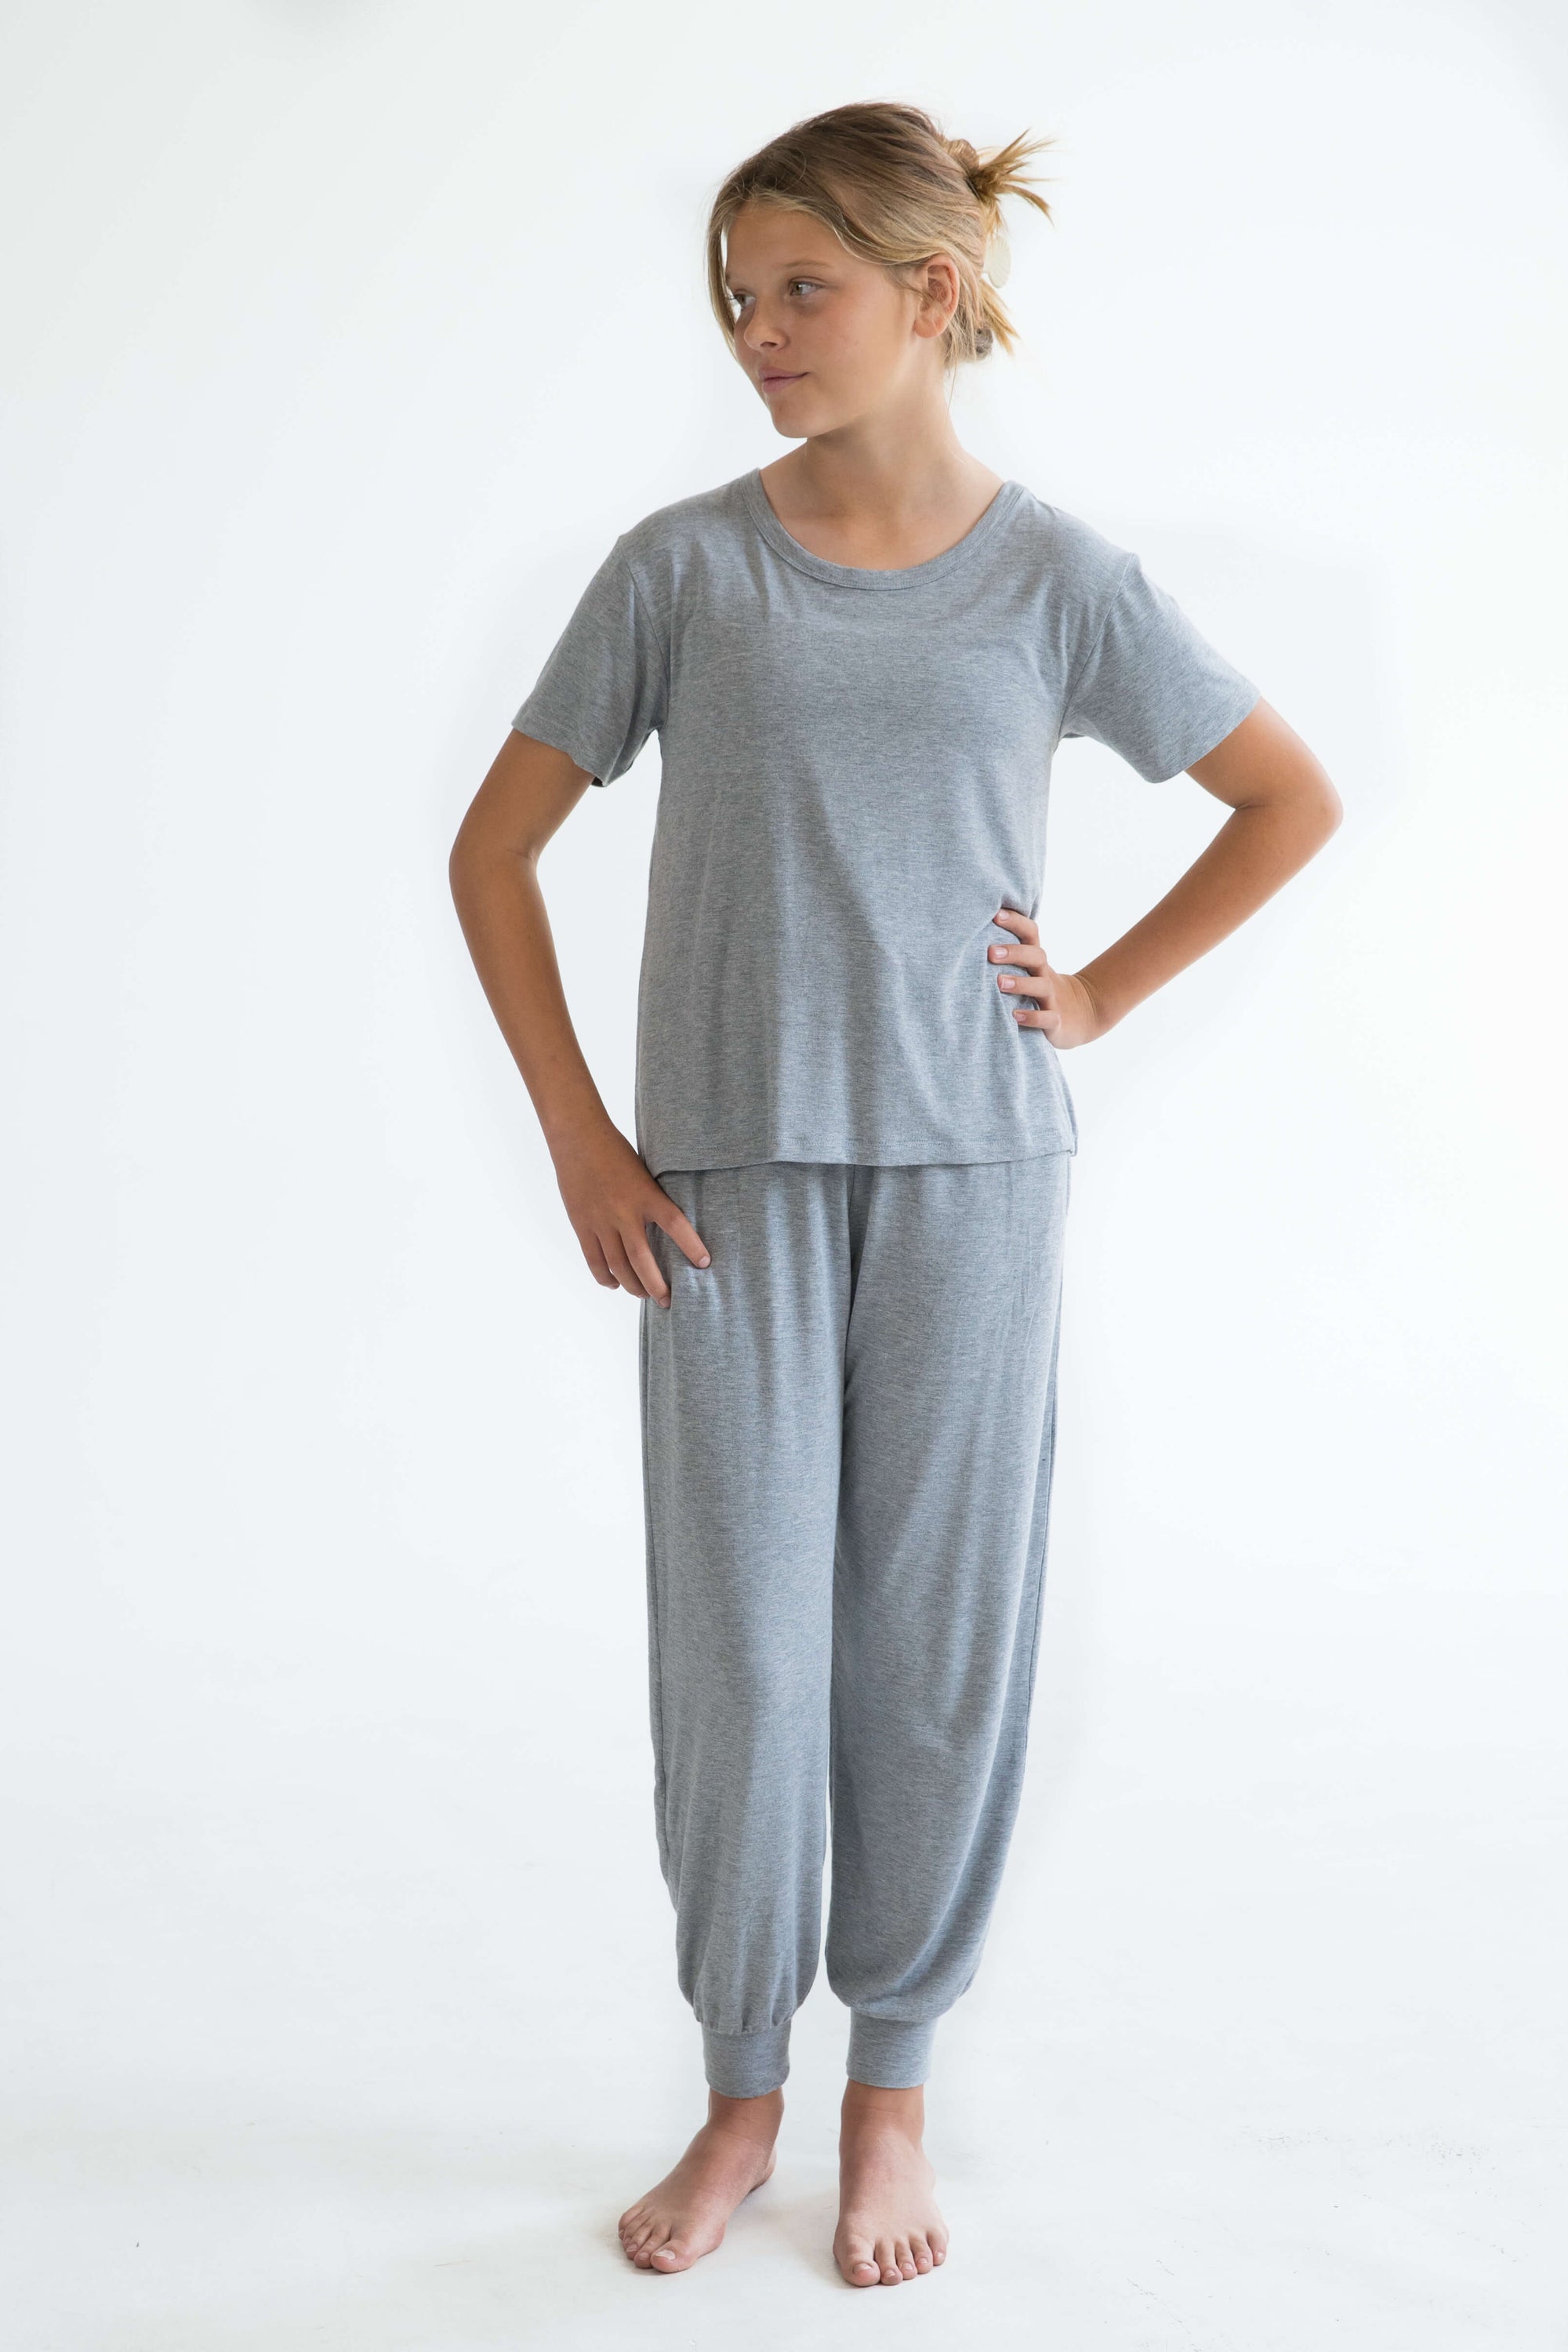 grey teen girls pyjamas set long pants and short sleeve top by Love Haidee Australia front